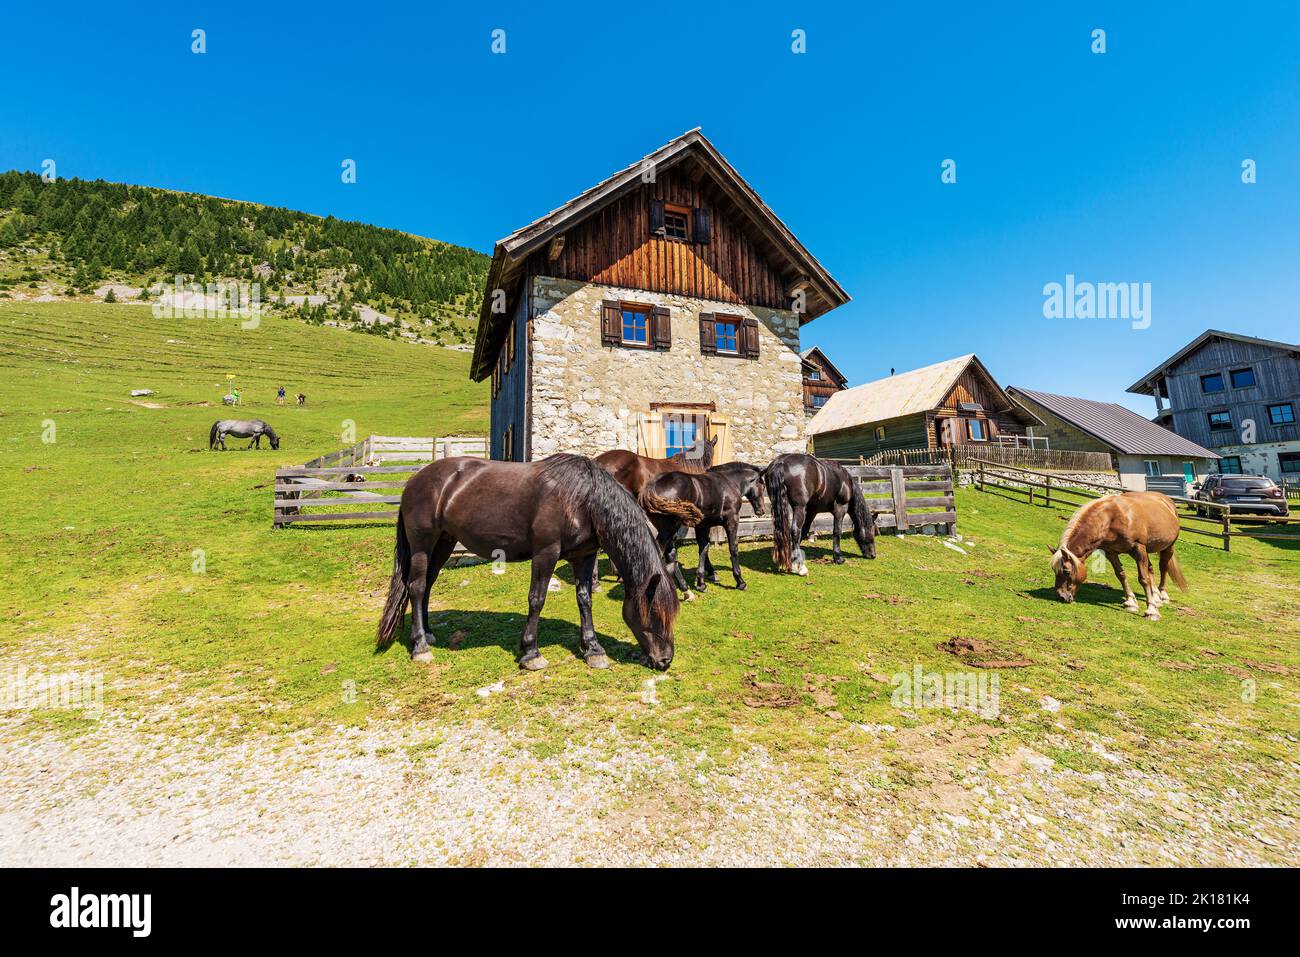 Herd of brown horses in a mountain pasture, Italy-Austria border, Feistritz an der Gail municipality, Osternig or Oisternig peak, Carinthia, Austria. Stock Photo